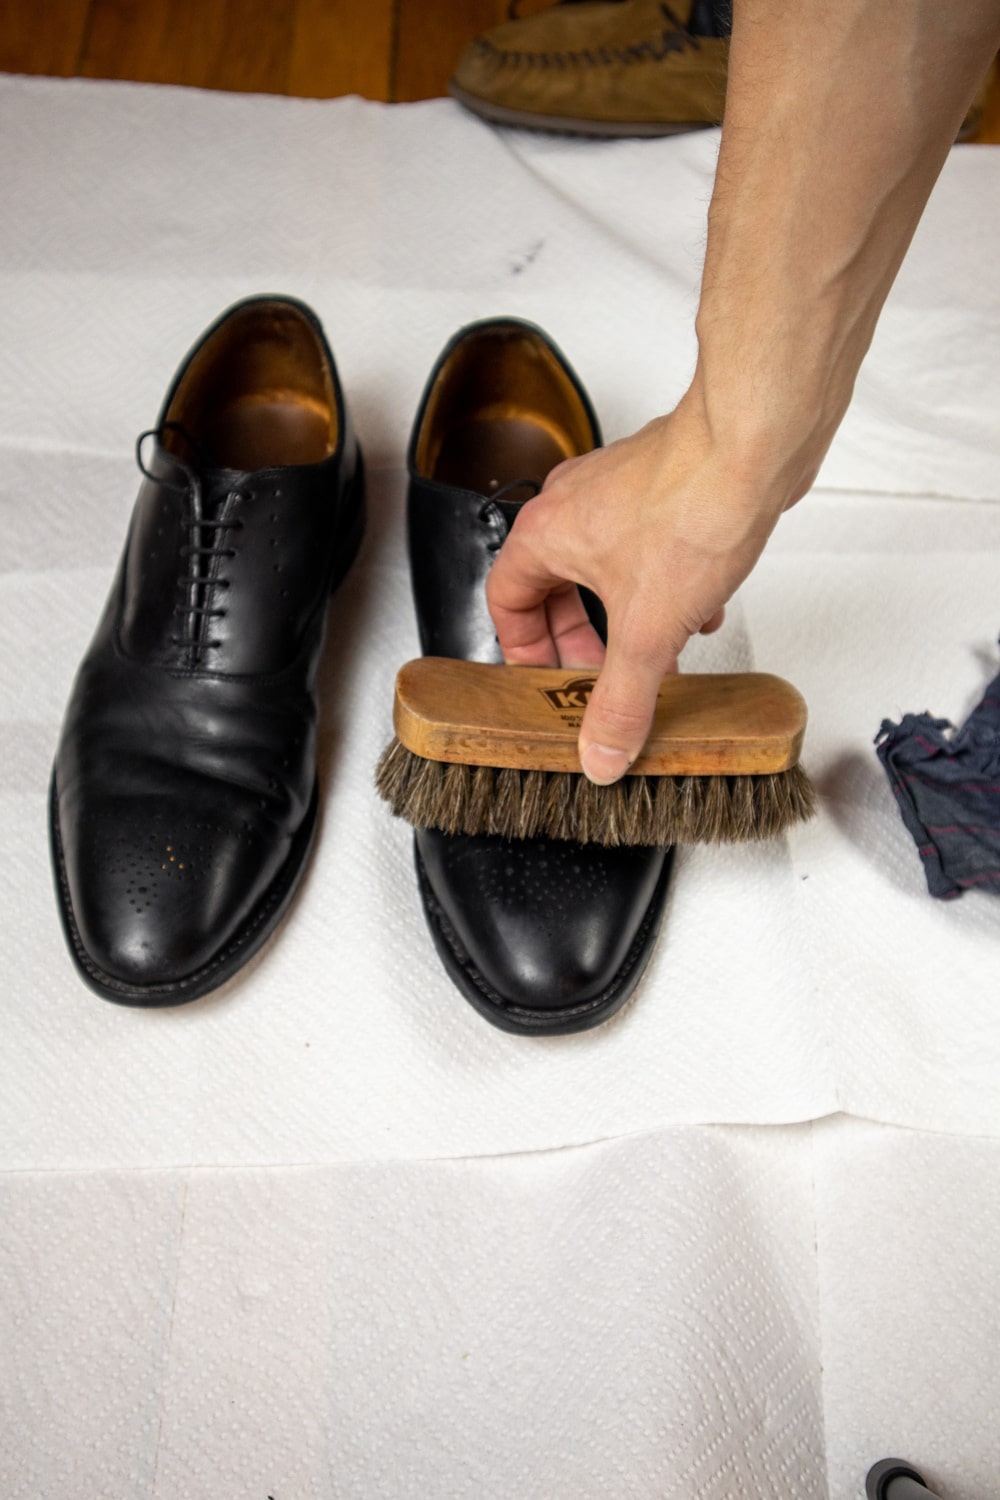 10 Best Selling Shoe Polishes for 2024 - The Jerusalem Post